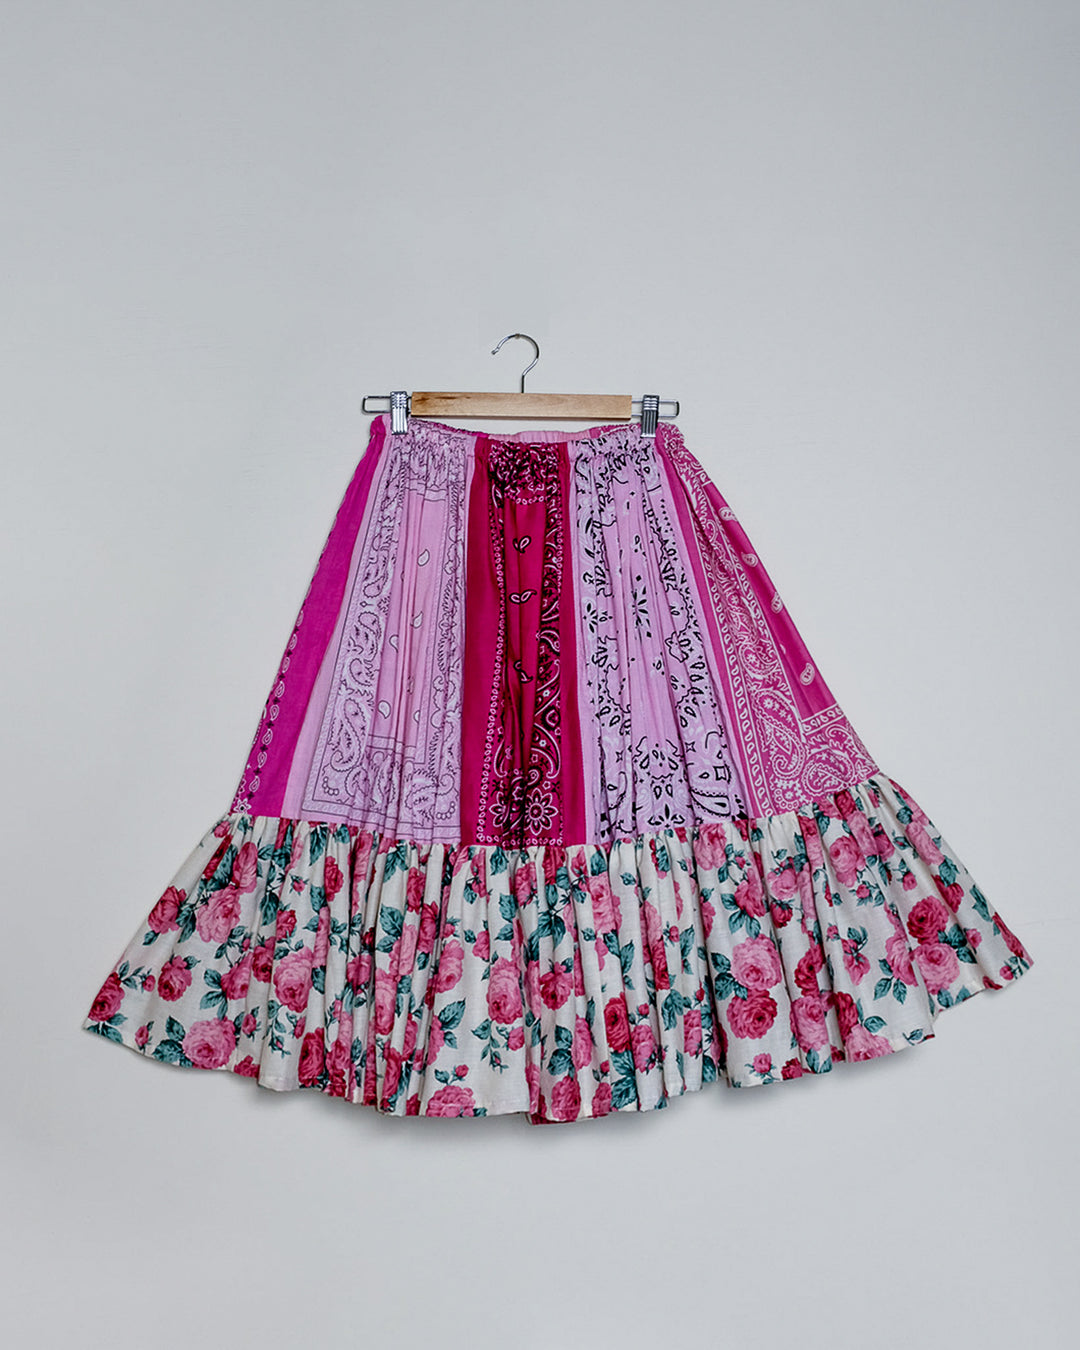 Rosie Bandana Skirt, S